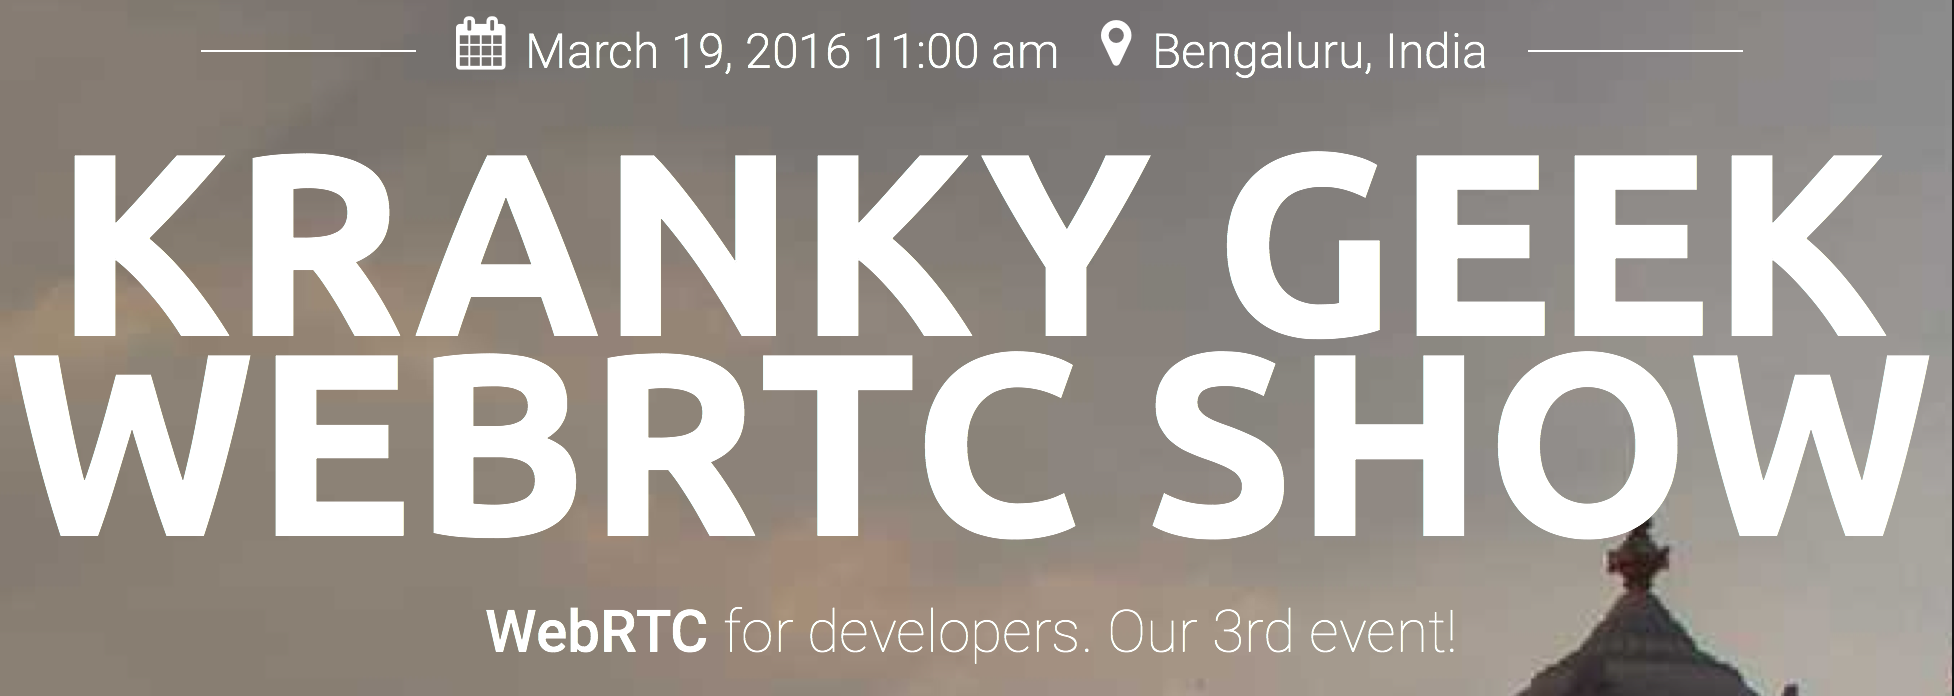 Talk: Kranky Geek WebRTC event in Bangalore